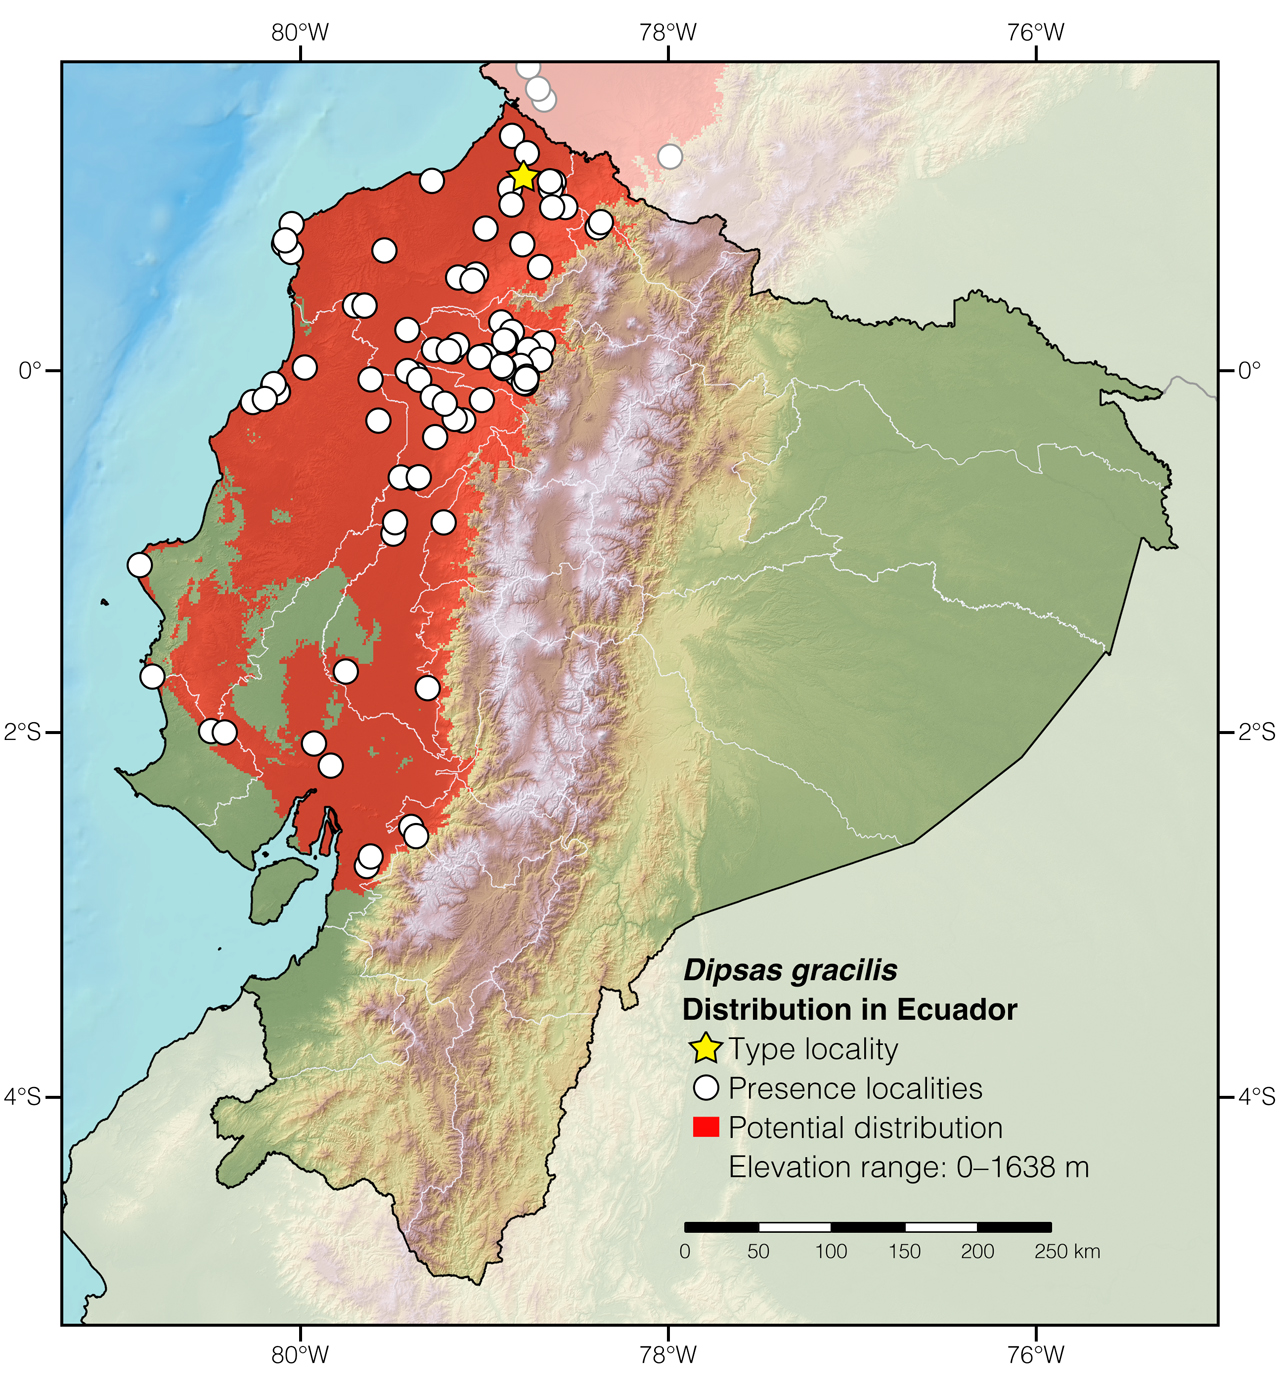 Distribution of Dipsas gracilis in Ecuador